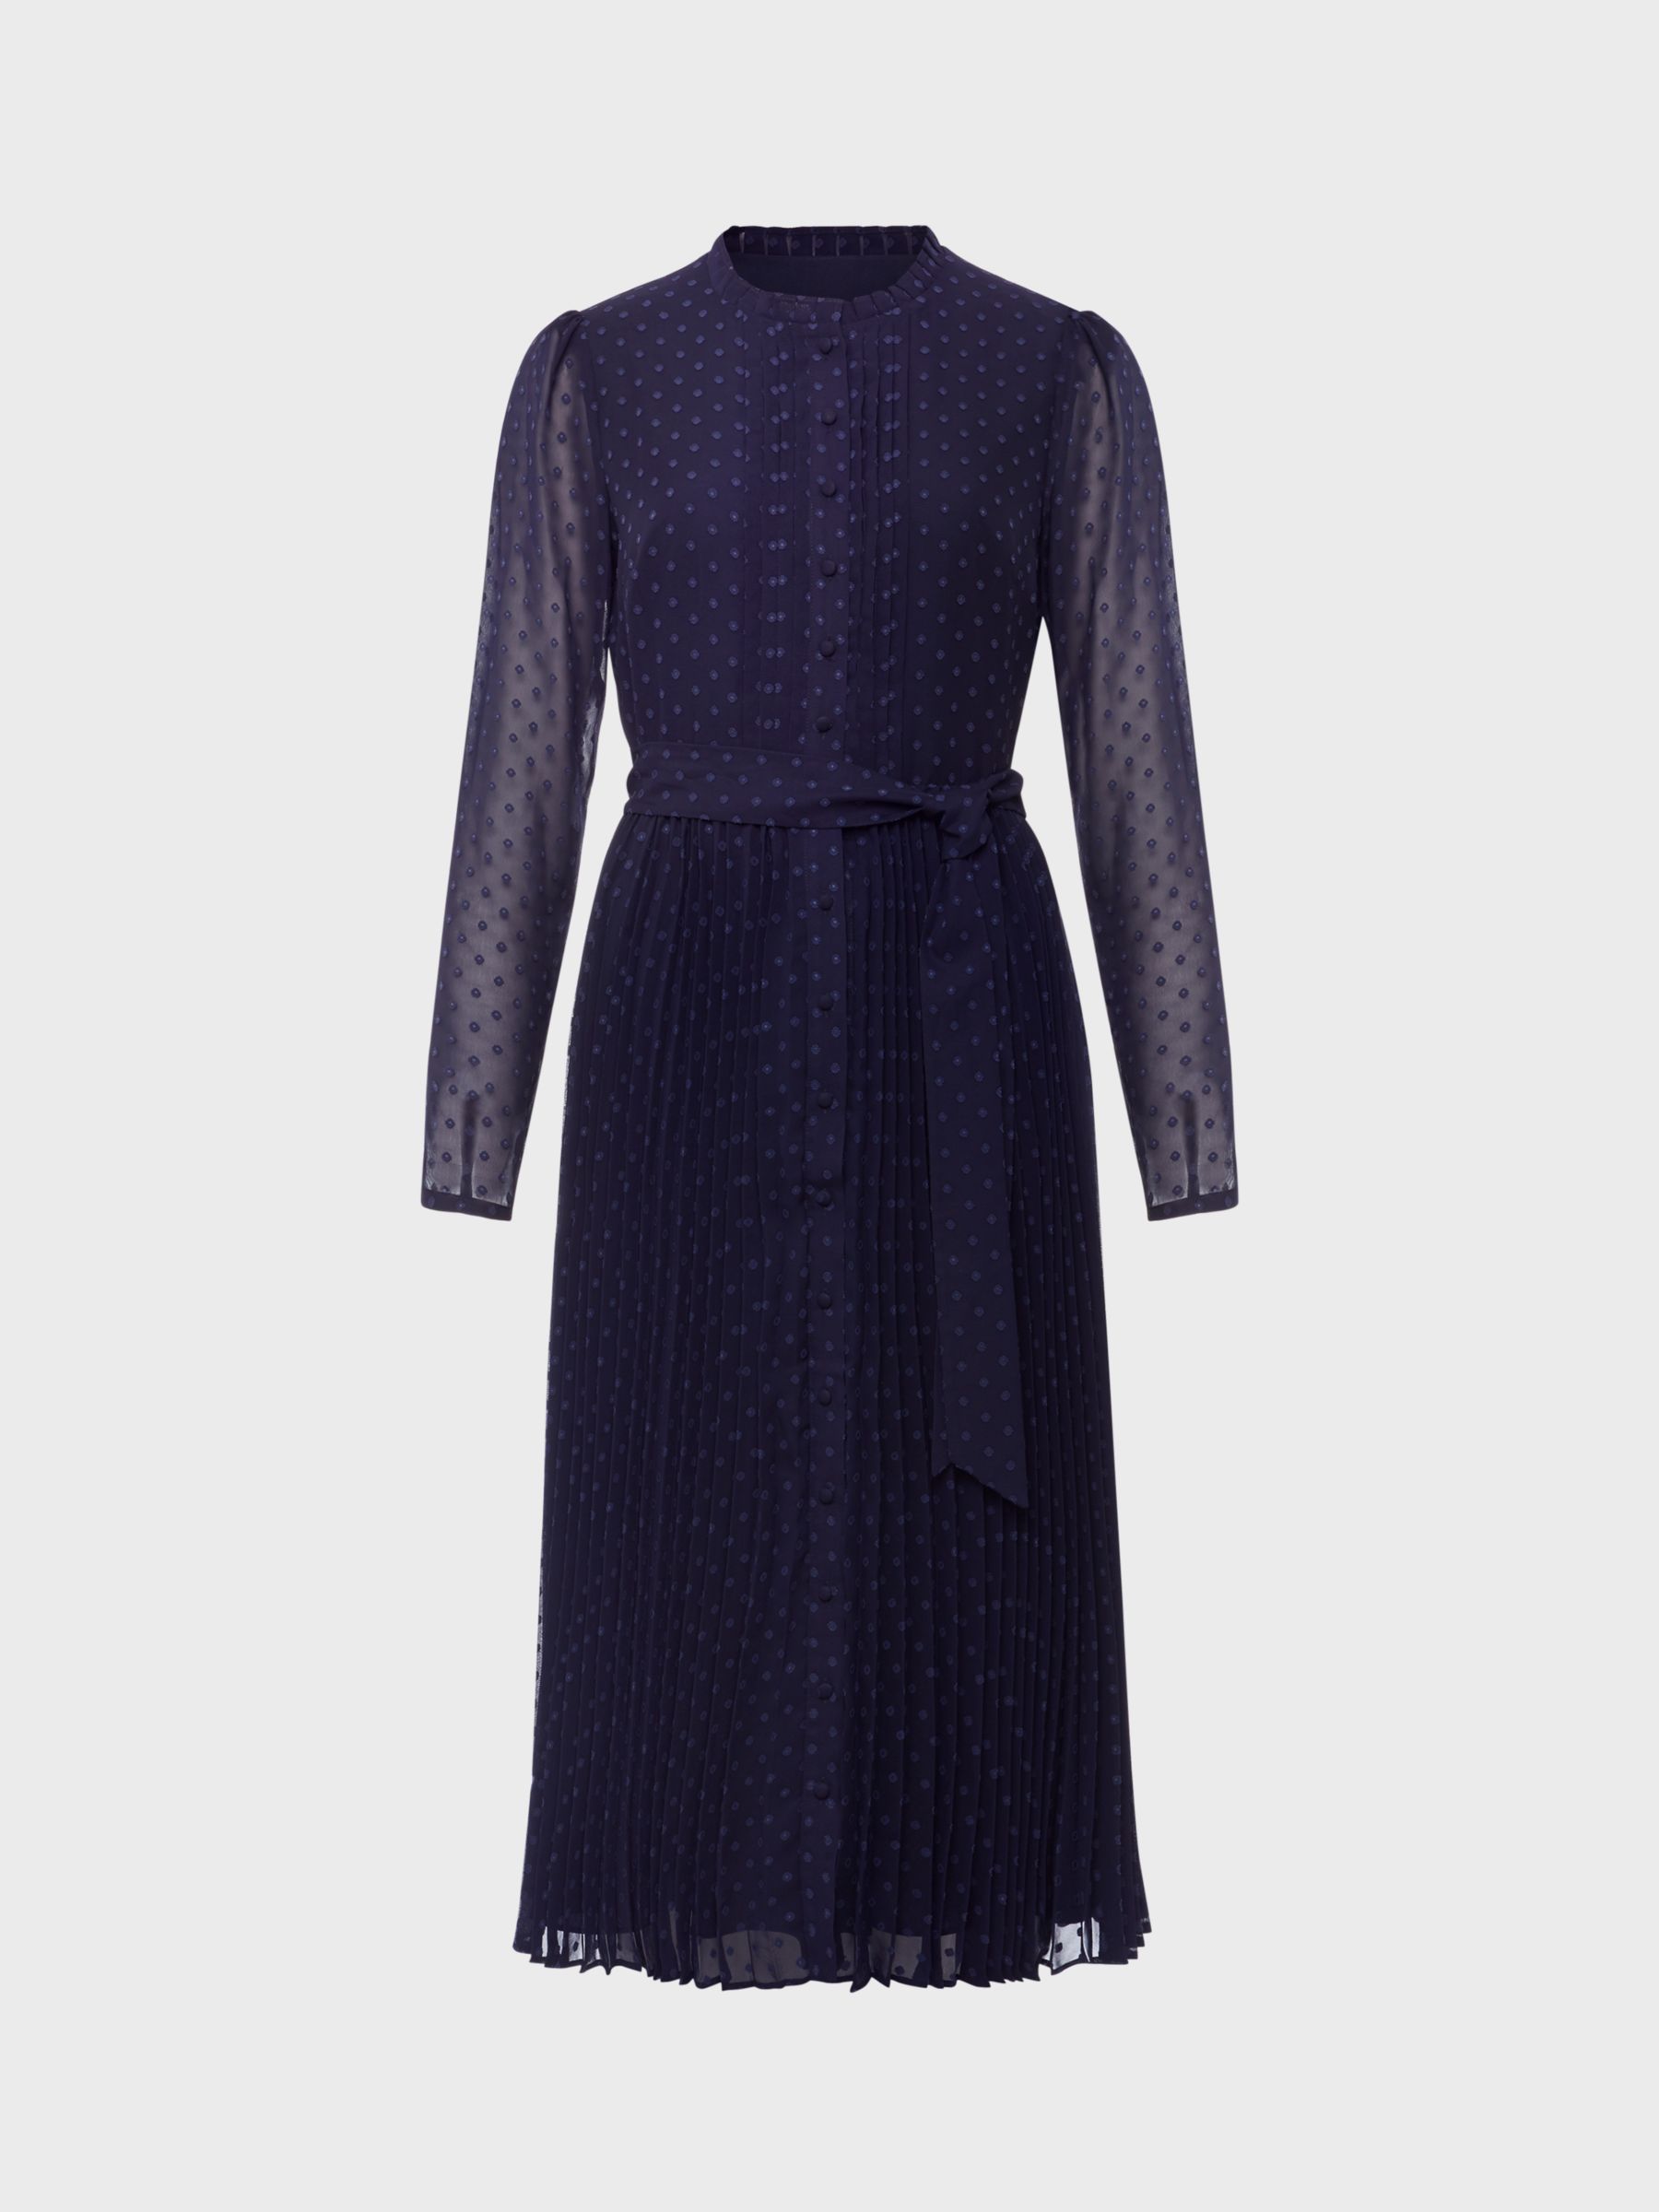 Hobbs Alara Spot Print Dress, Navy Blue at John Lewis & Partners